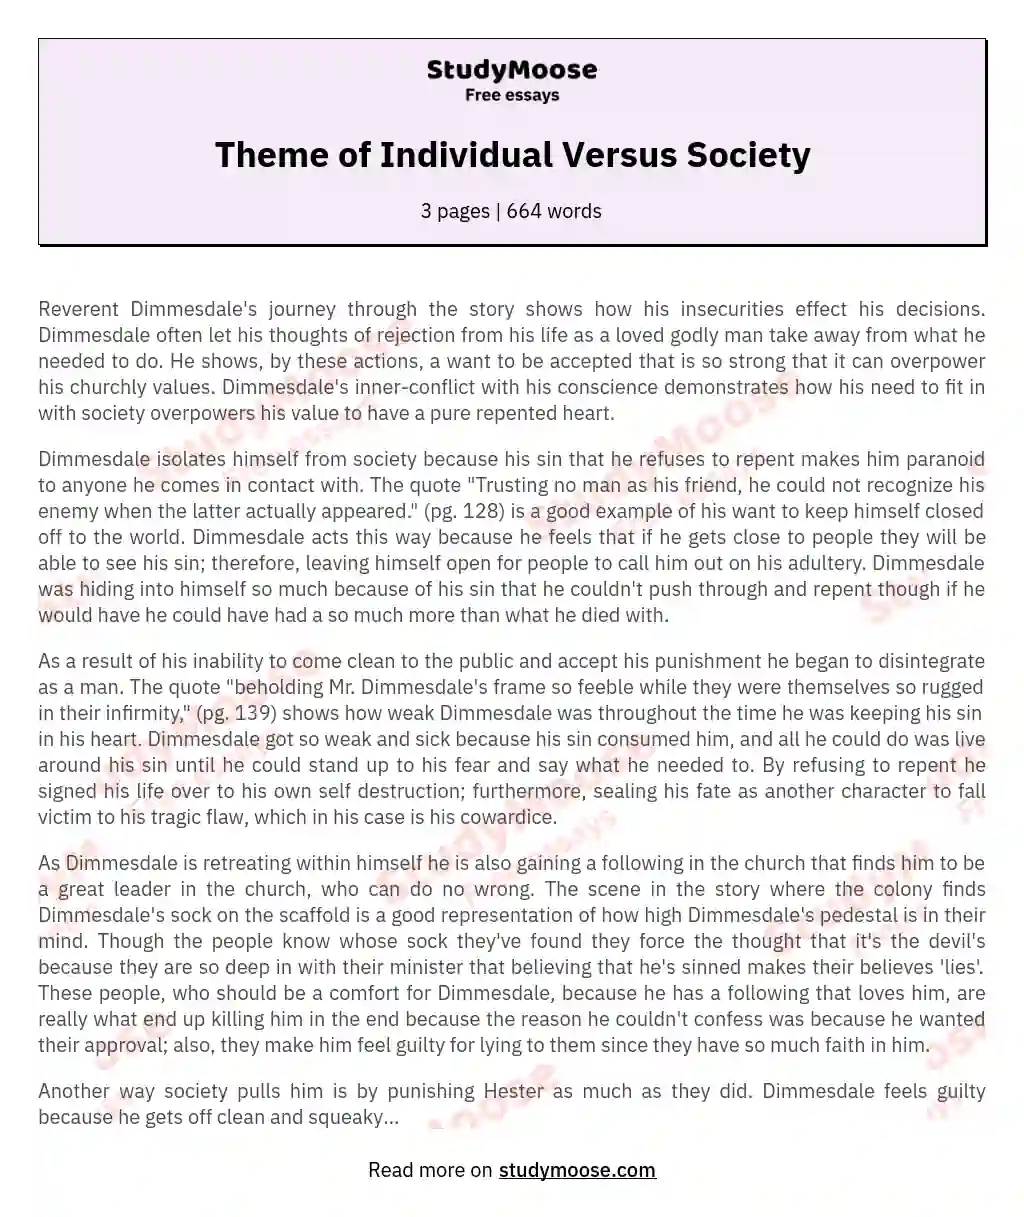 Theme of Individual Versus Society essay